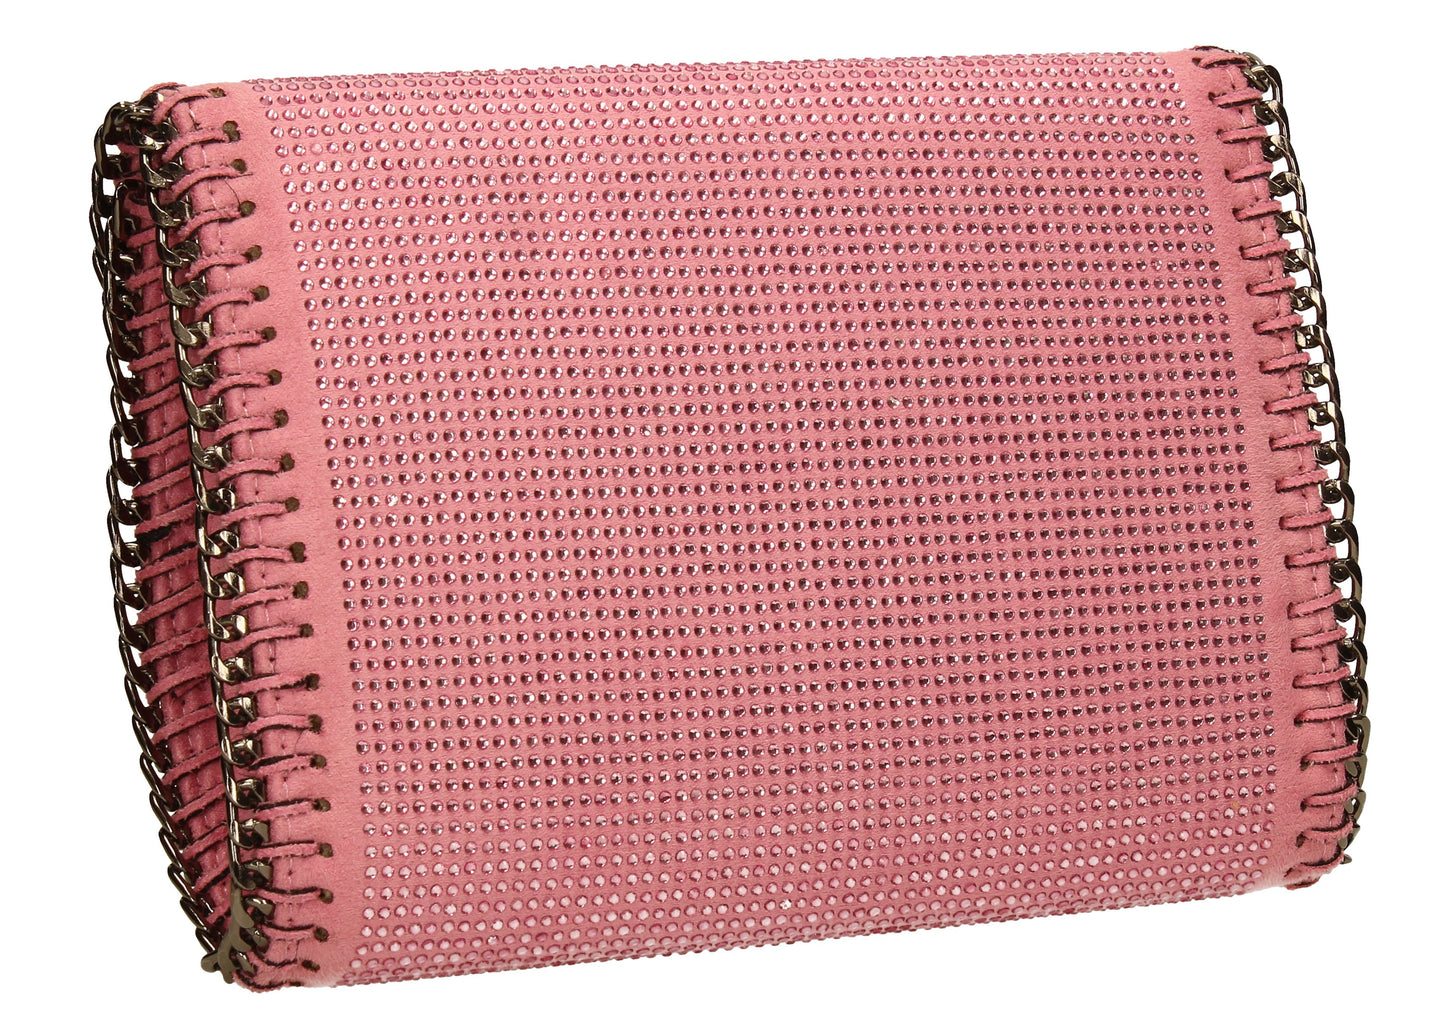 SWANKYSWANS Soi Diamante Clutch Bag Pink Cute Cheap Clutch Bag For Weddings School and Work